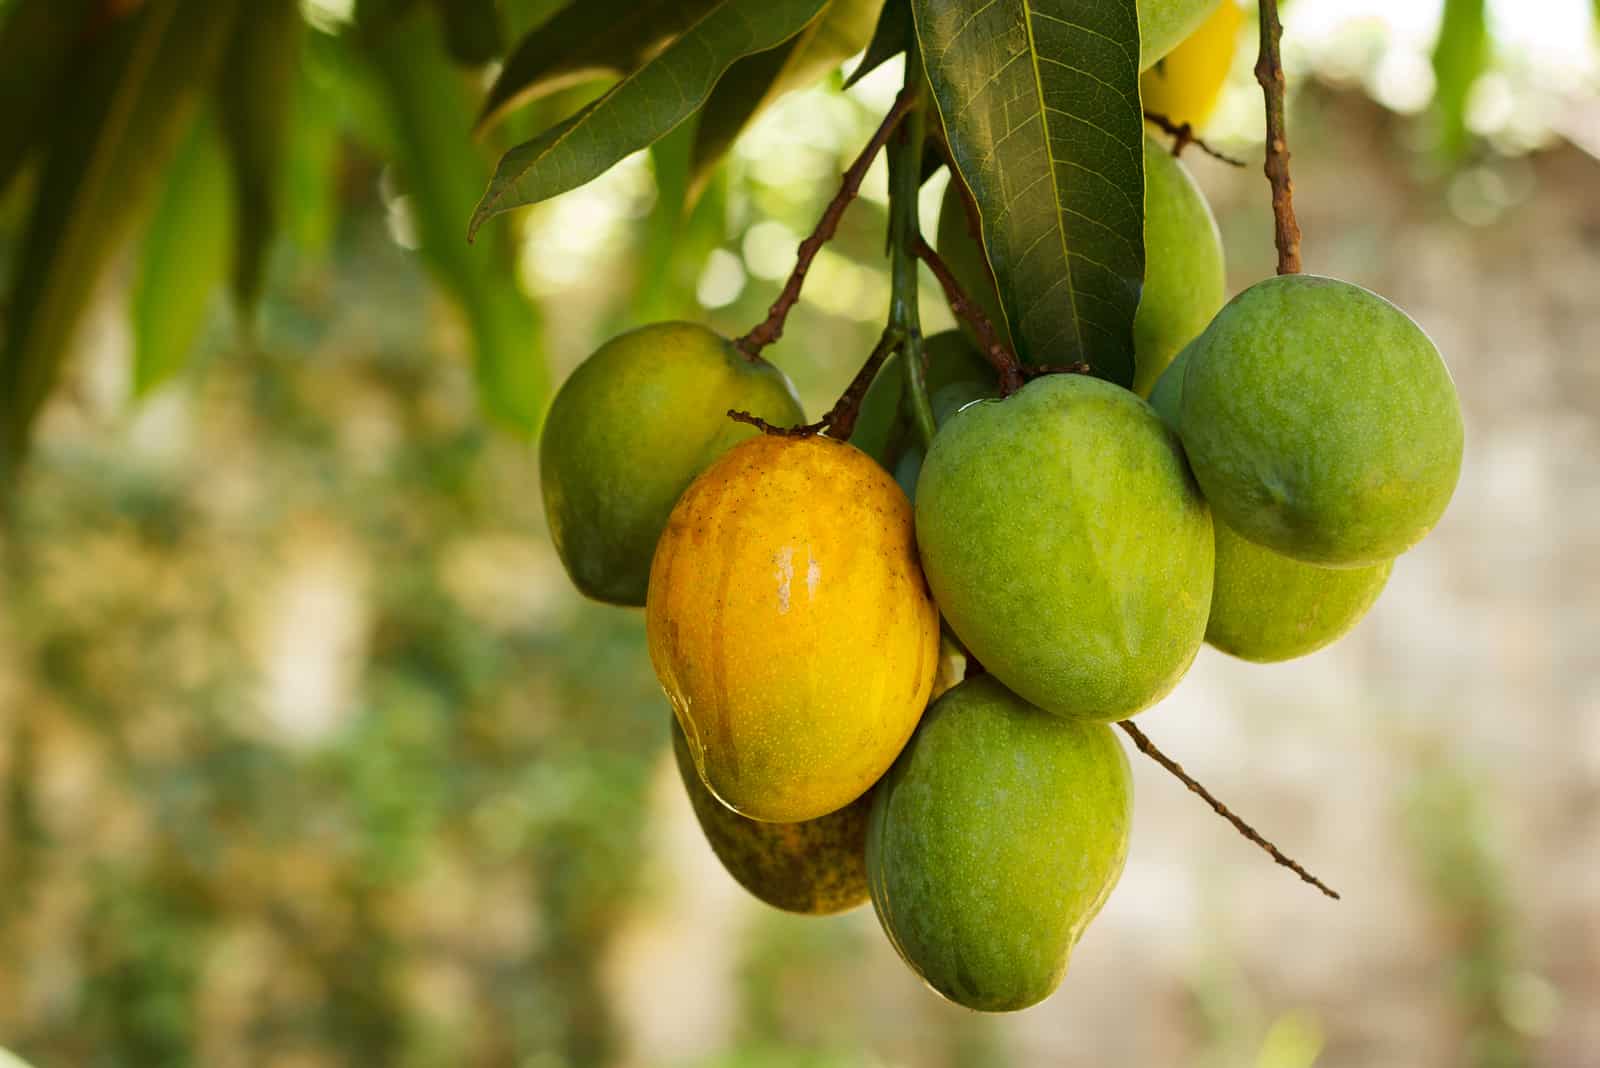 Bunch of green and ripe orange mango on tree